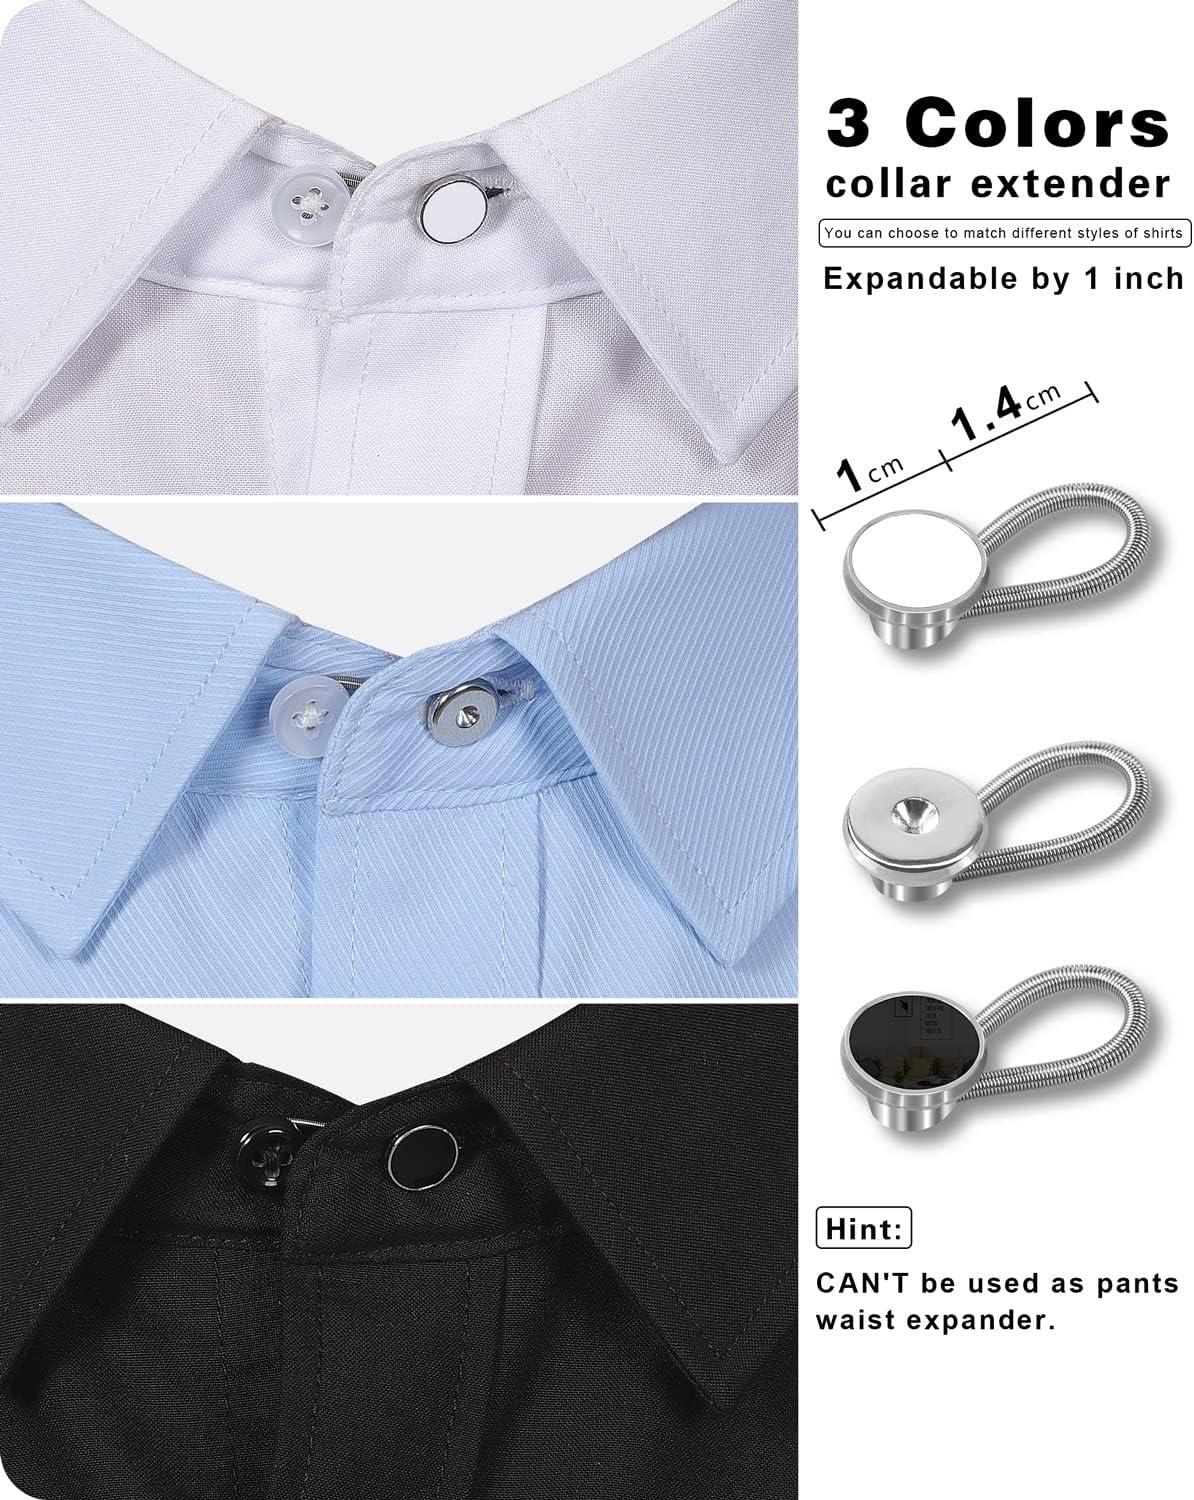 Comfy Clothiers Pants Button Extenders (10-Pack) Waist Extenders